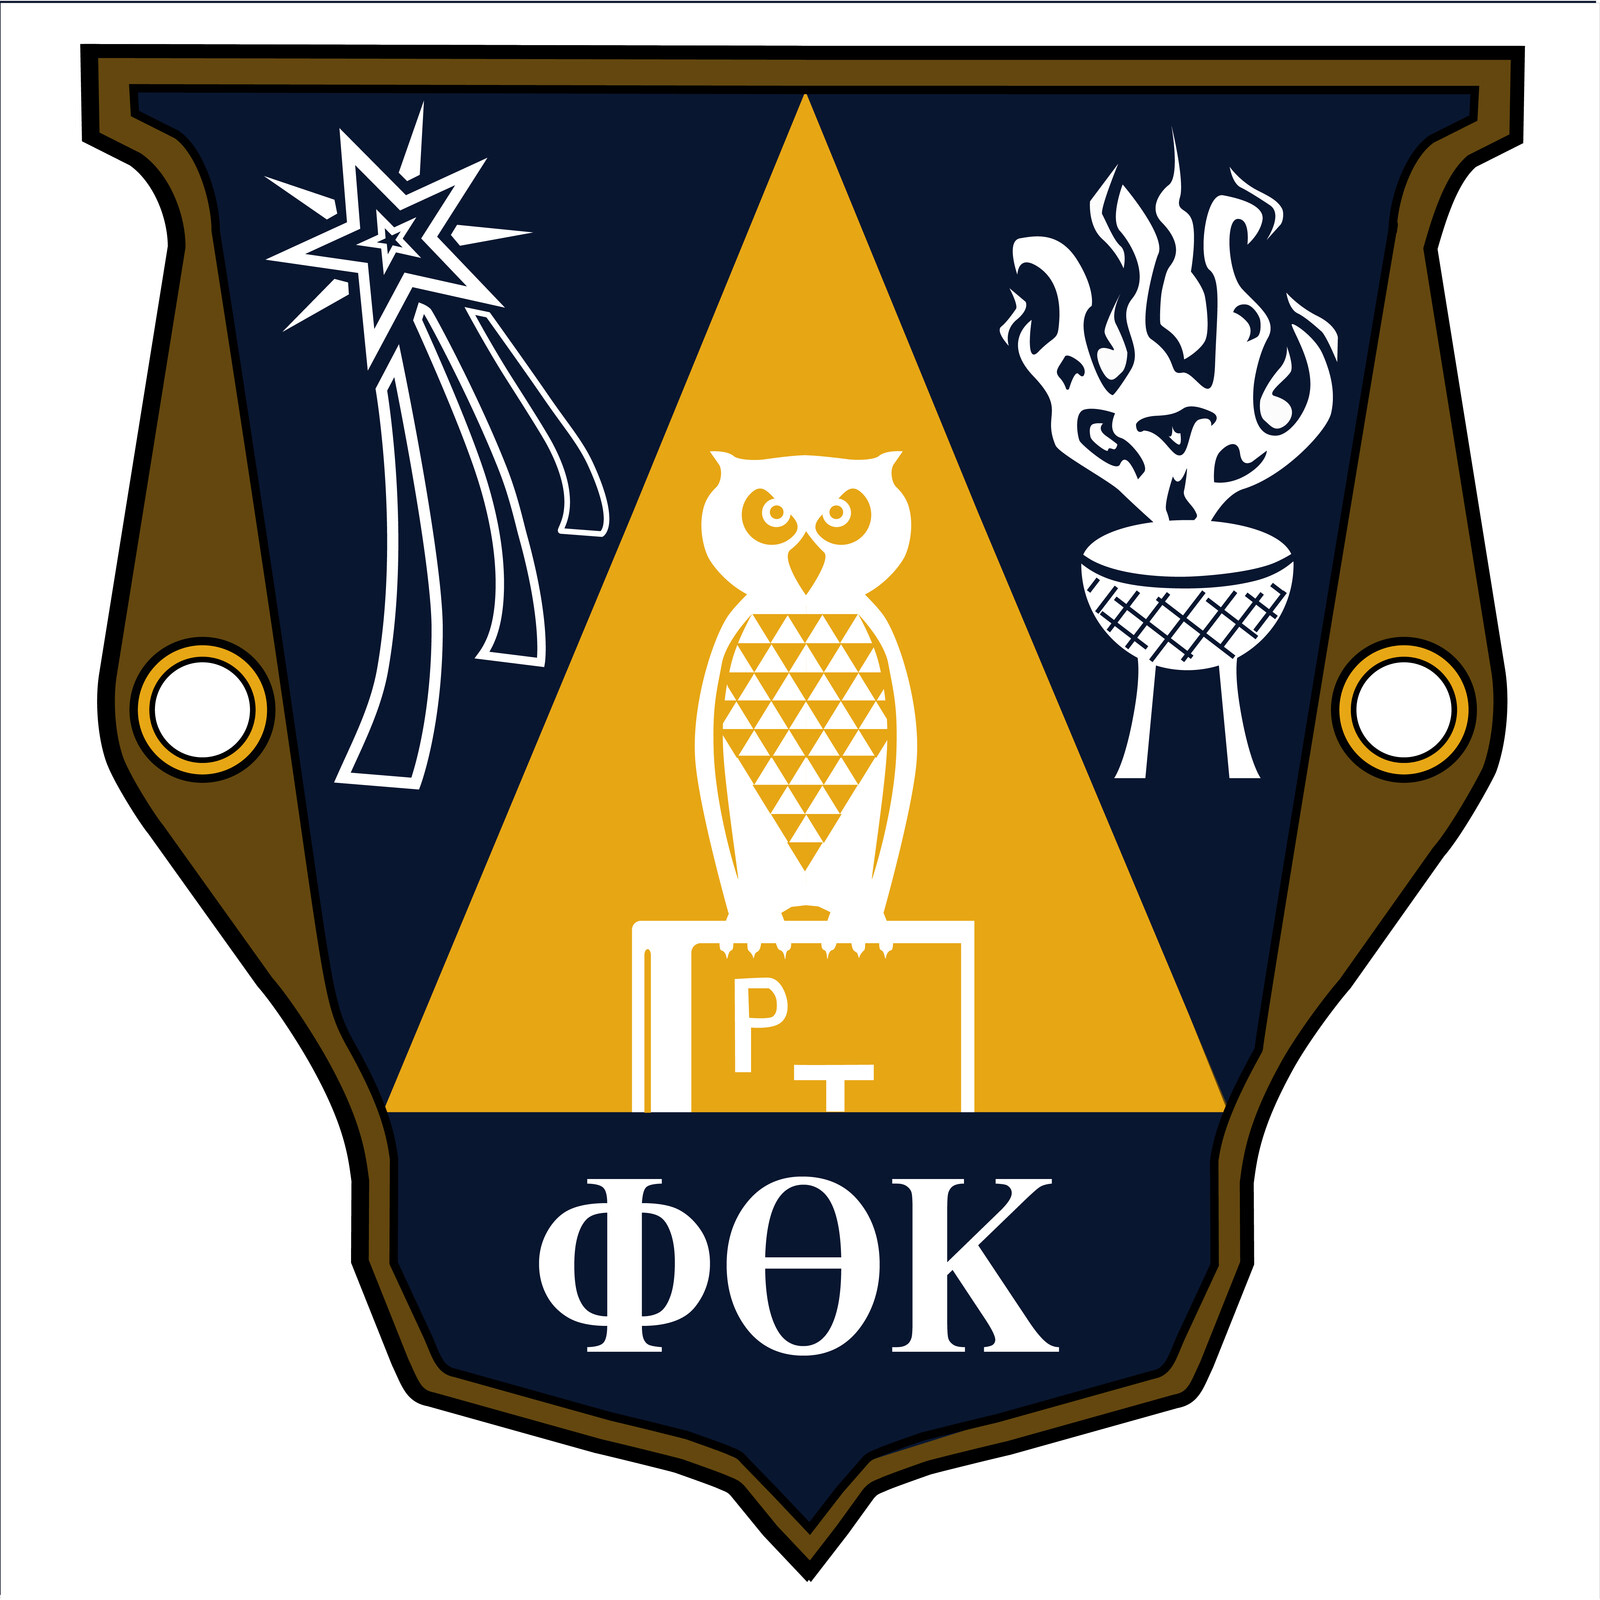 Original version of the updated crest